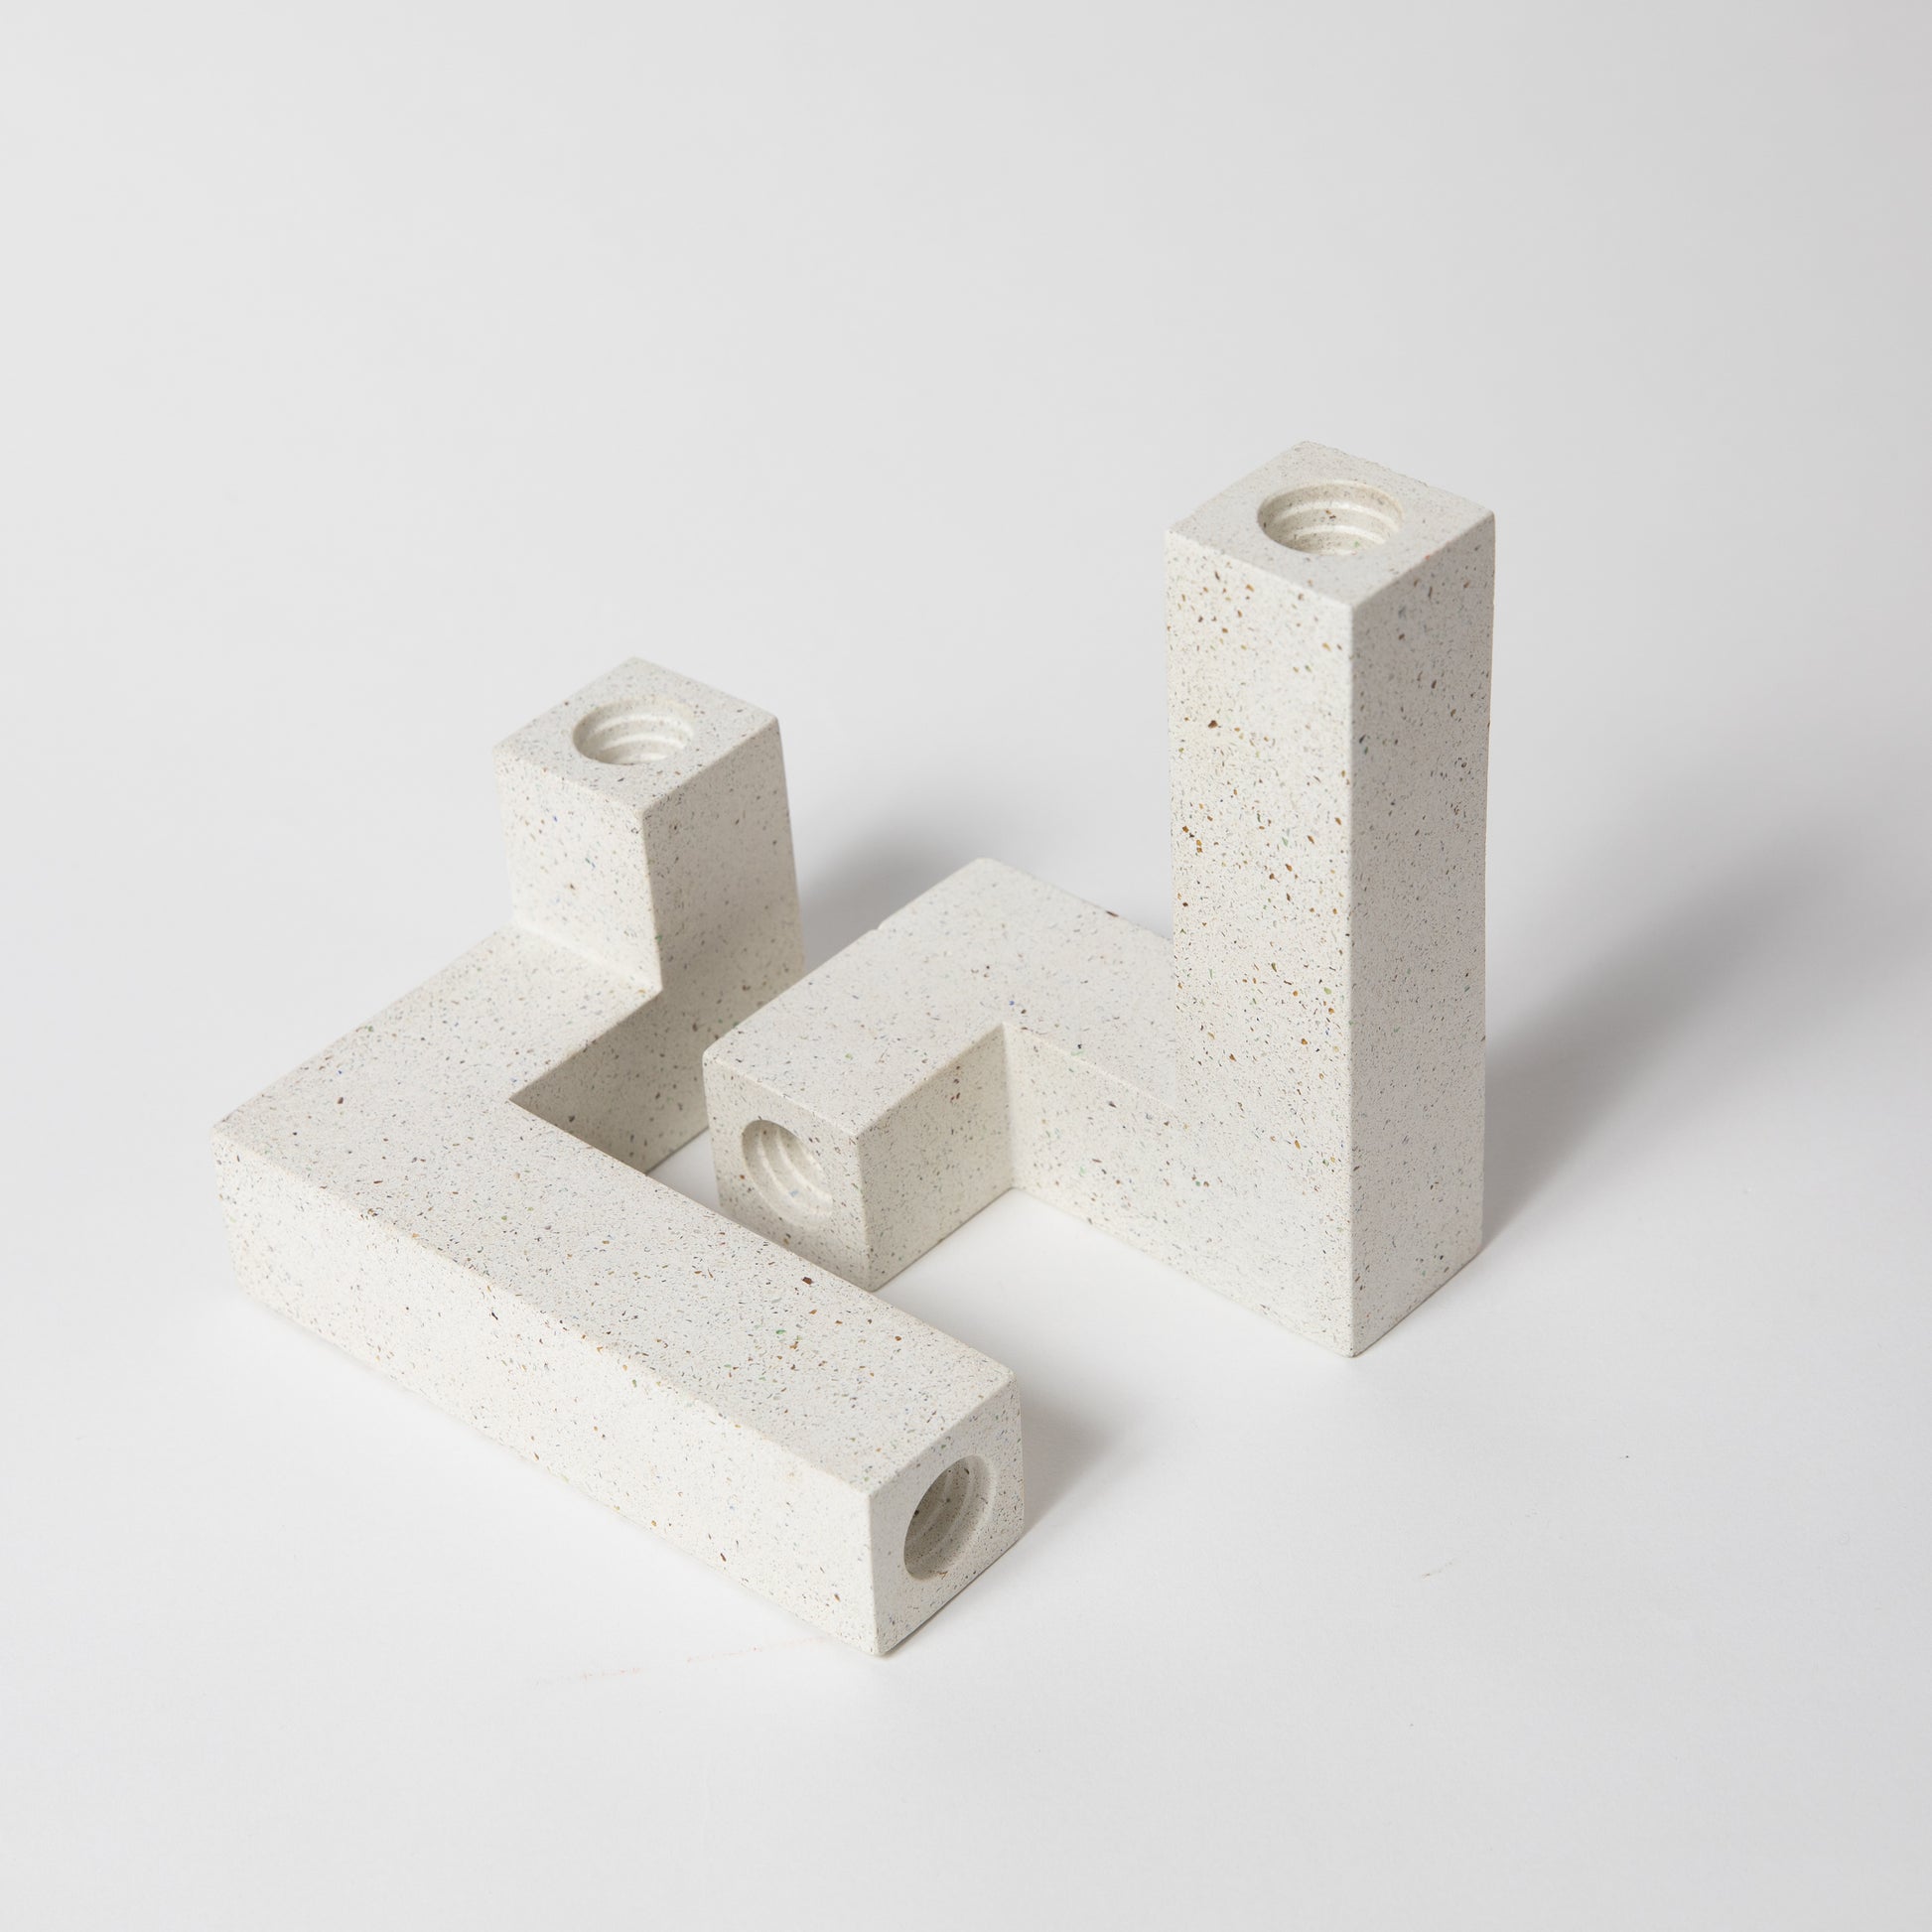 Concrete candlestick holder, set of 2 in white terrazzo.